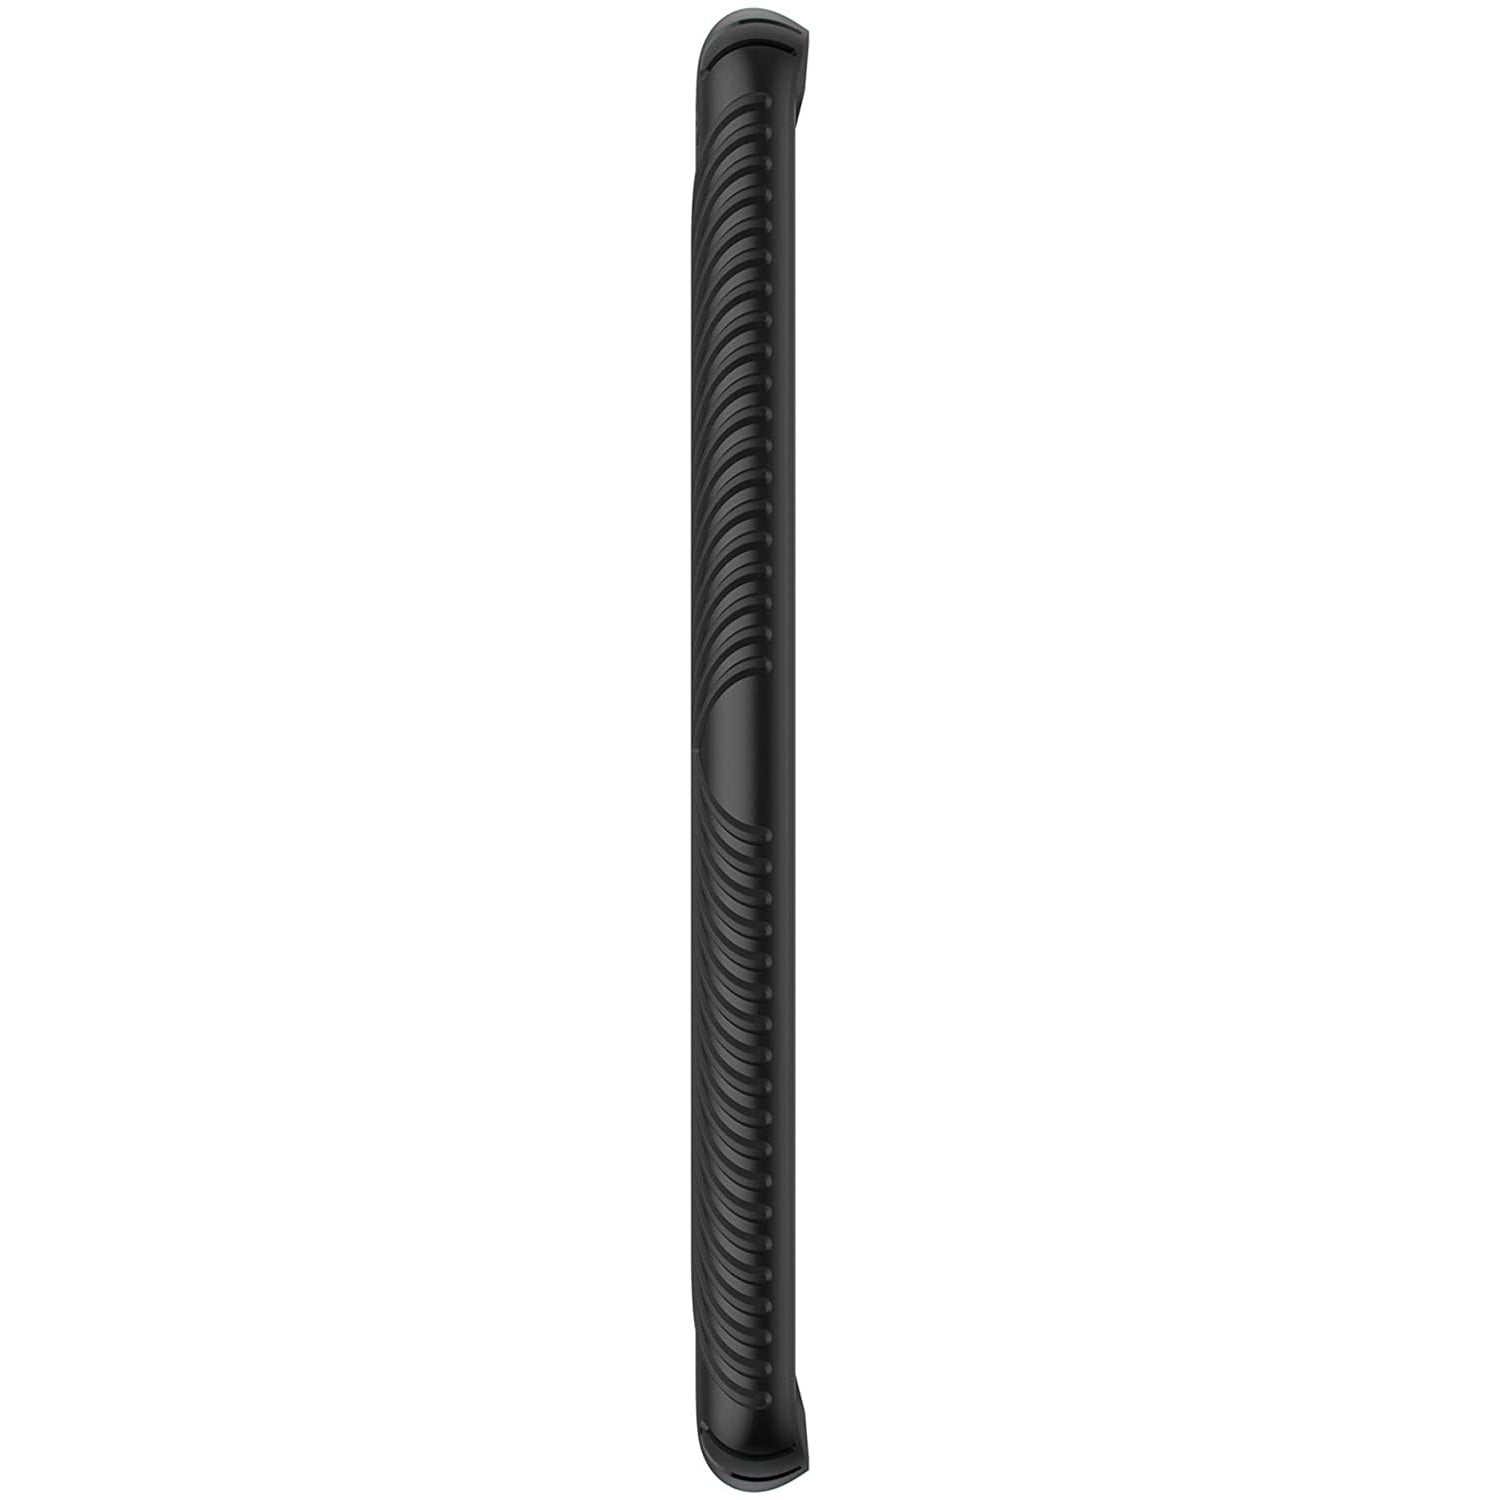 Speck Presidio Grip Case for Huawei P20 Pro, Black